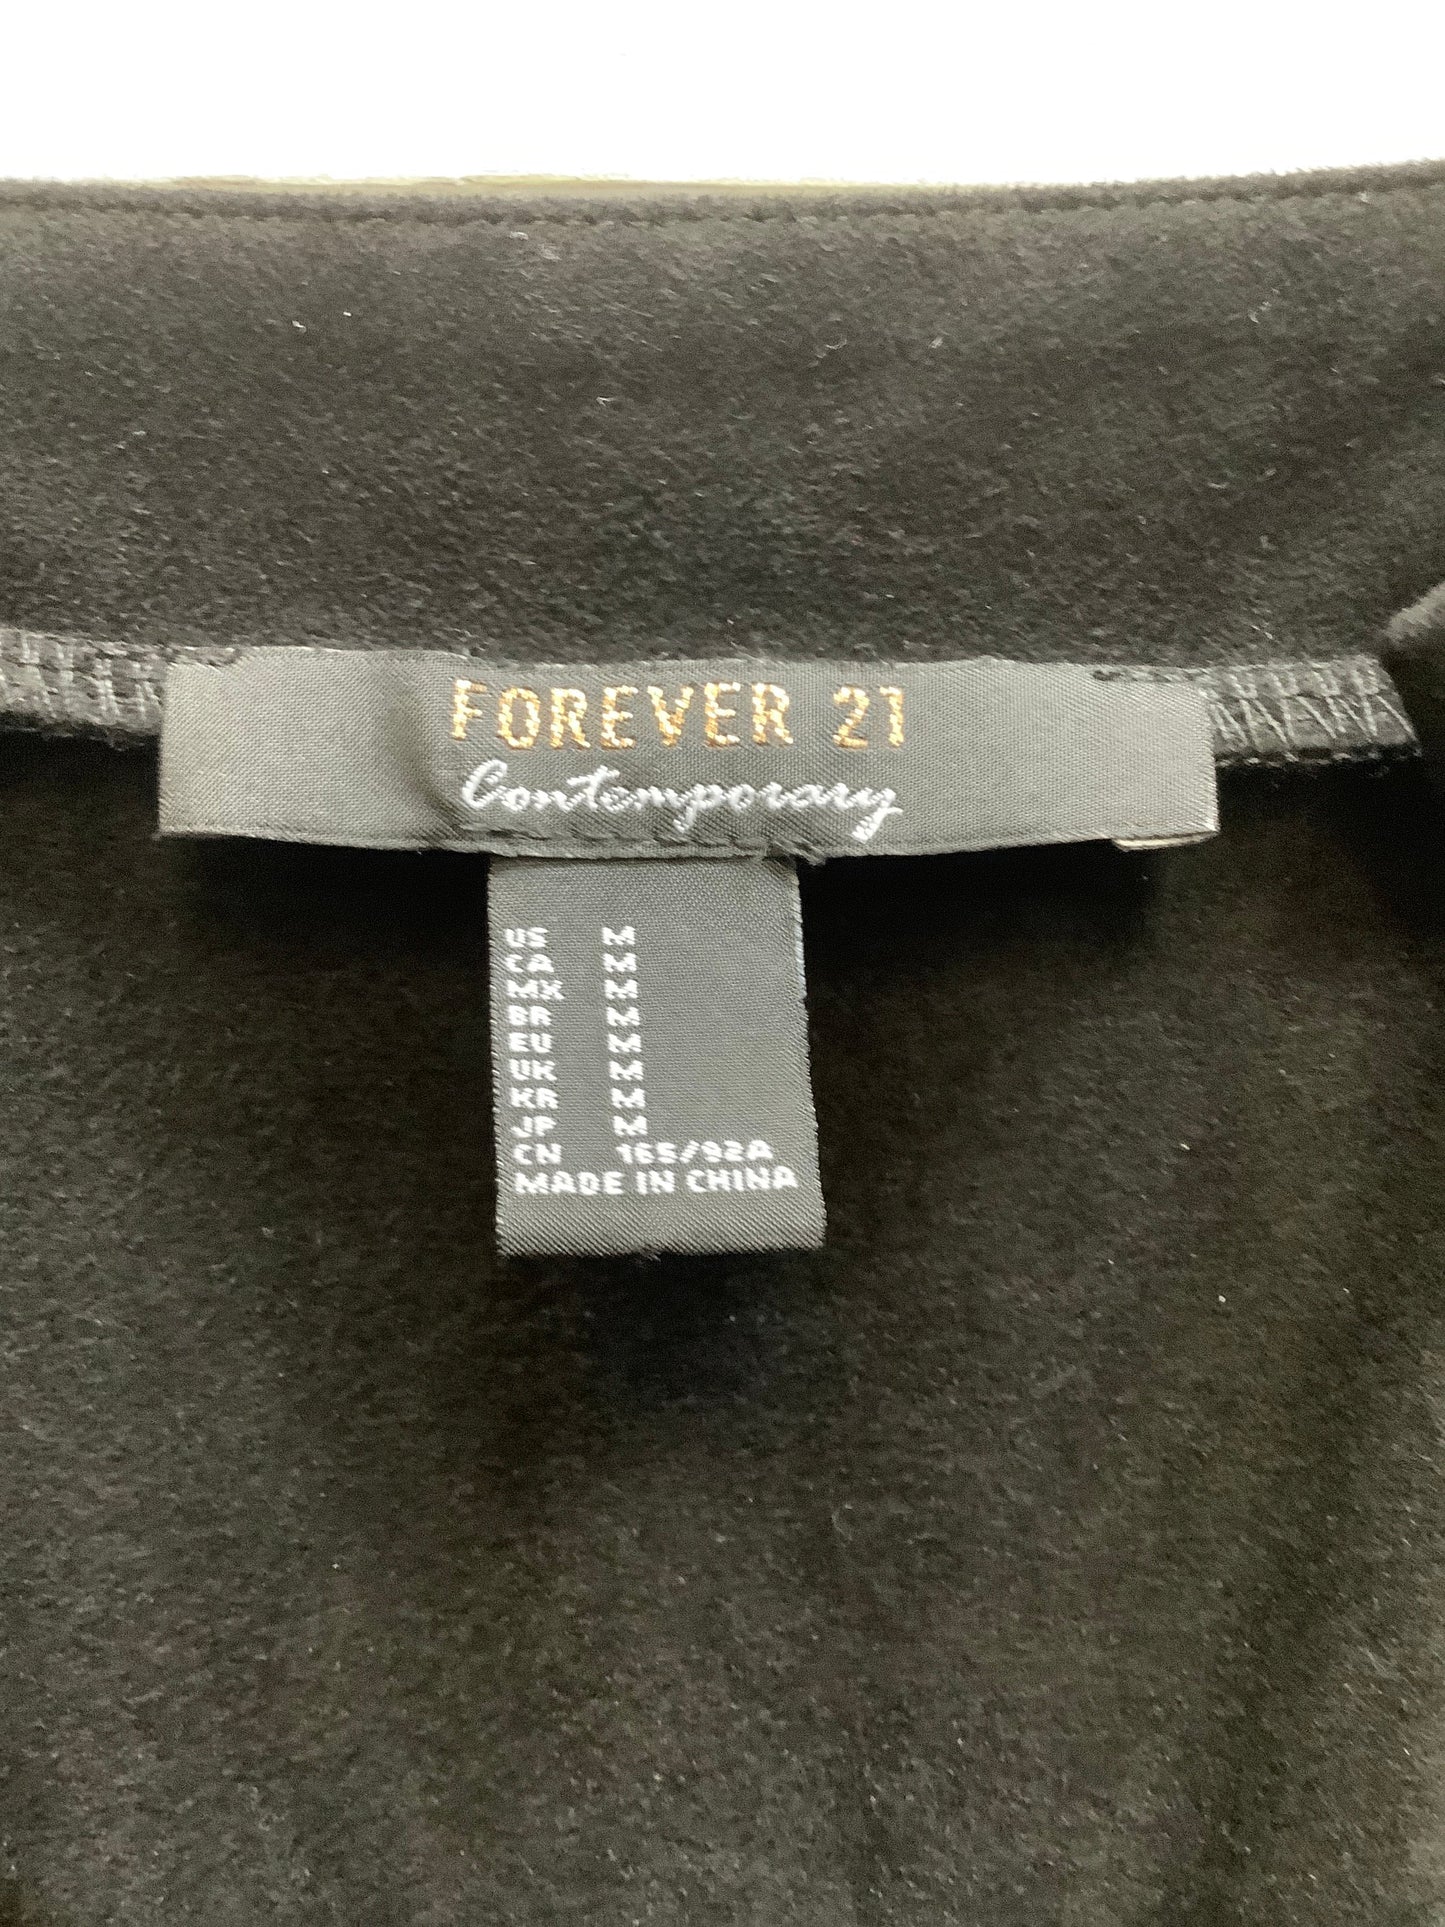 Black Dress Casual Short Forever 21, Size M